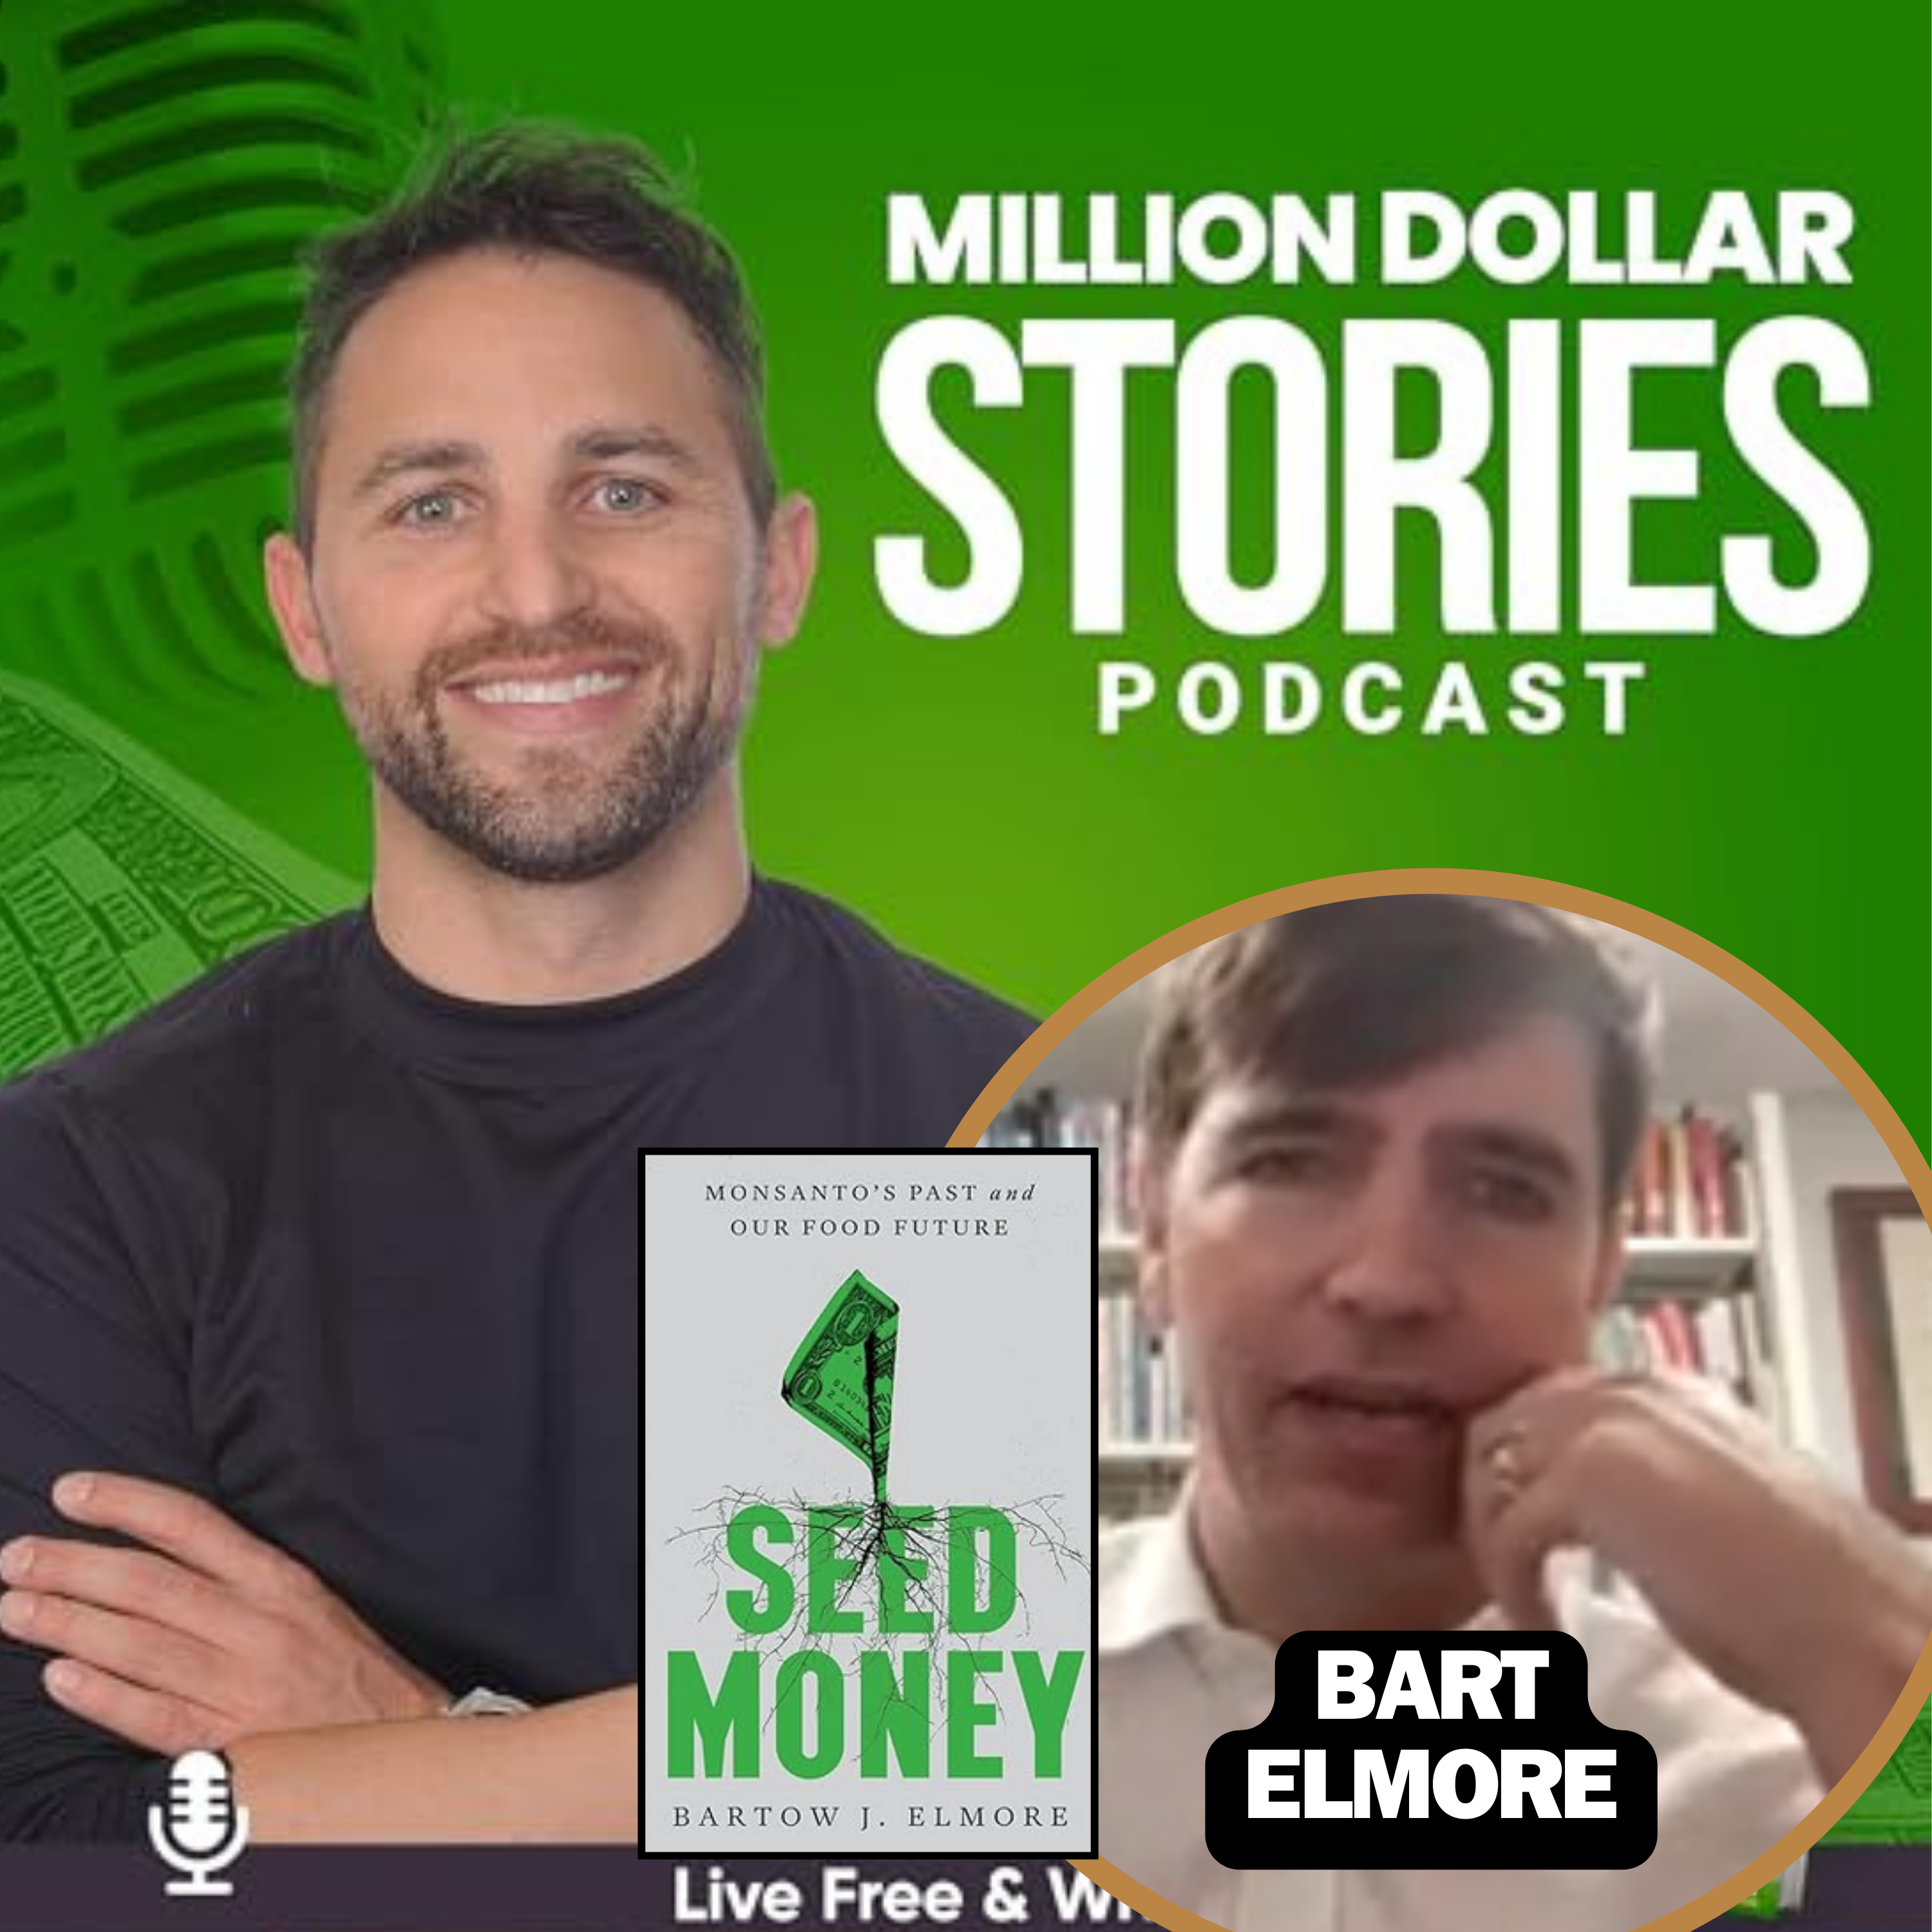 Bart Elmore – Author of “Seed Money”